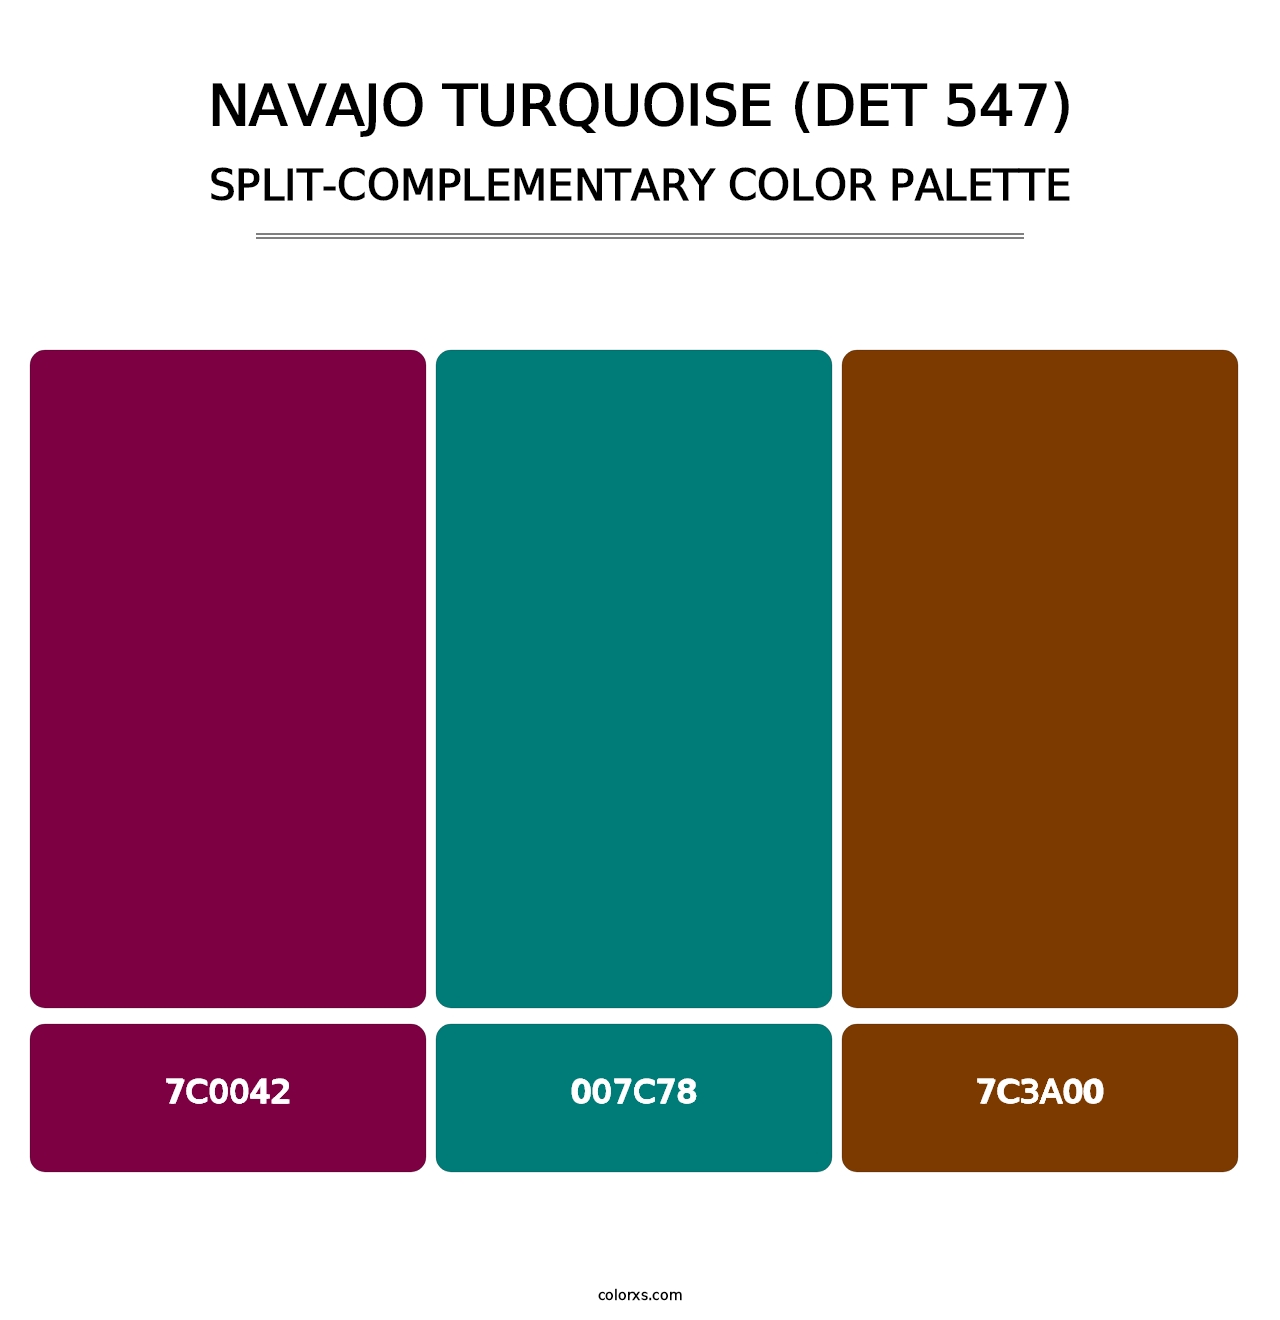 Navajo Turquoise (DET 547) - Split-Complementary Color Palette